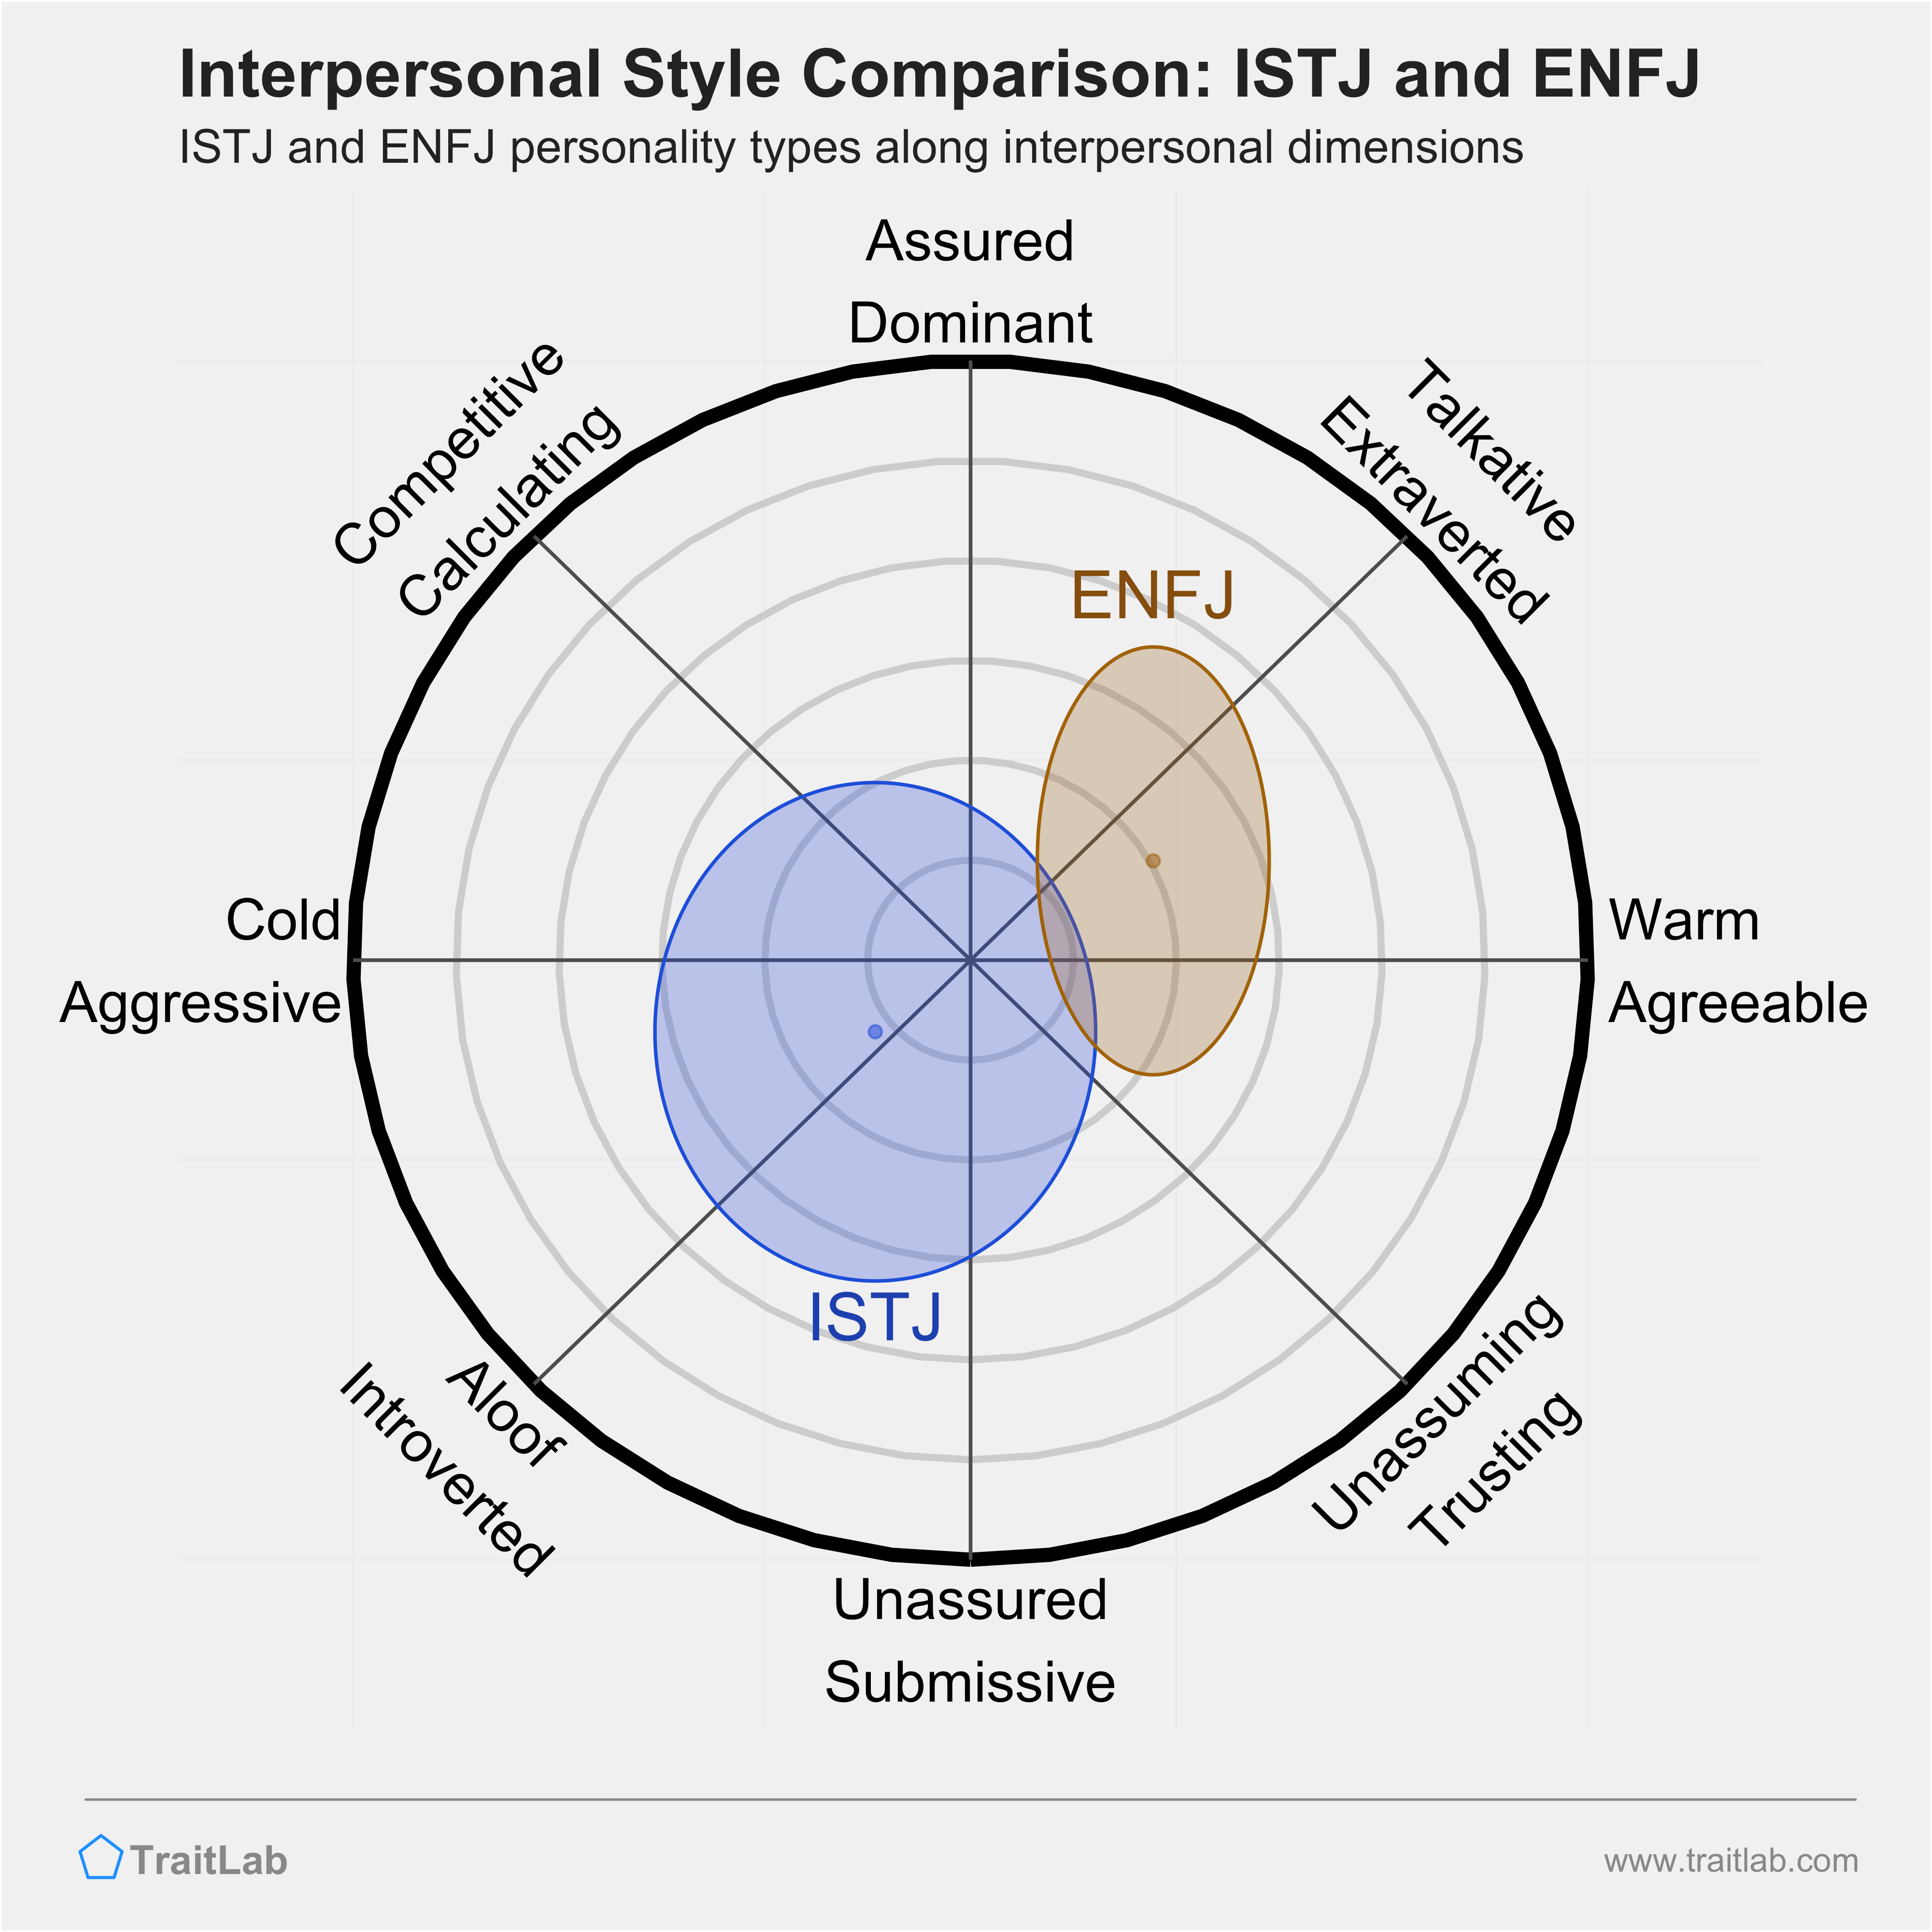 ISTJ and ENFJ comparison across interpersonal dimensions